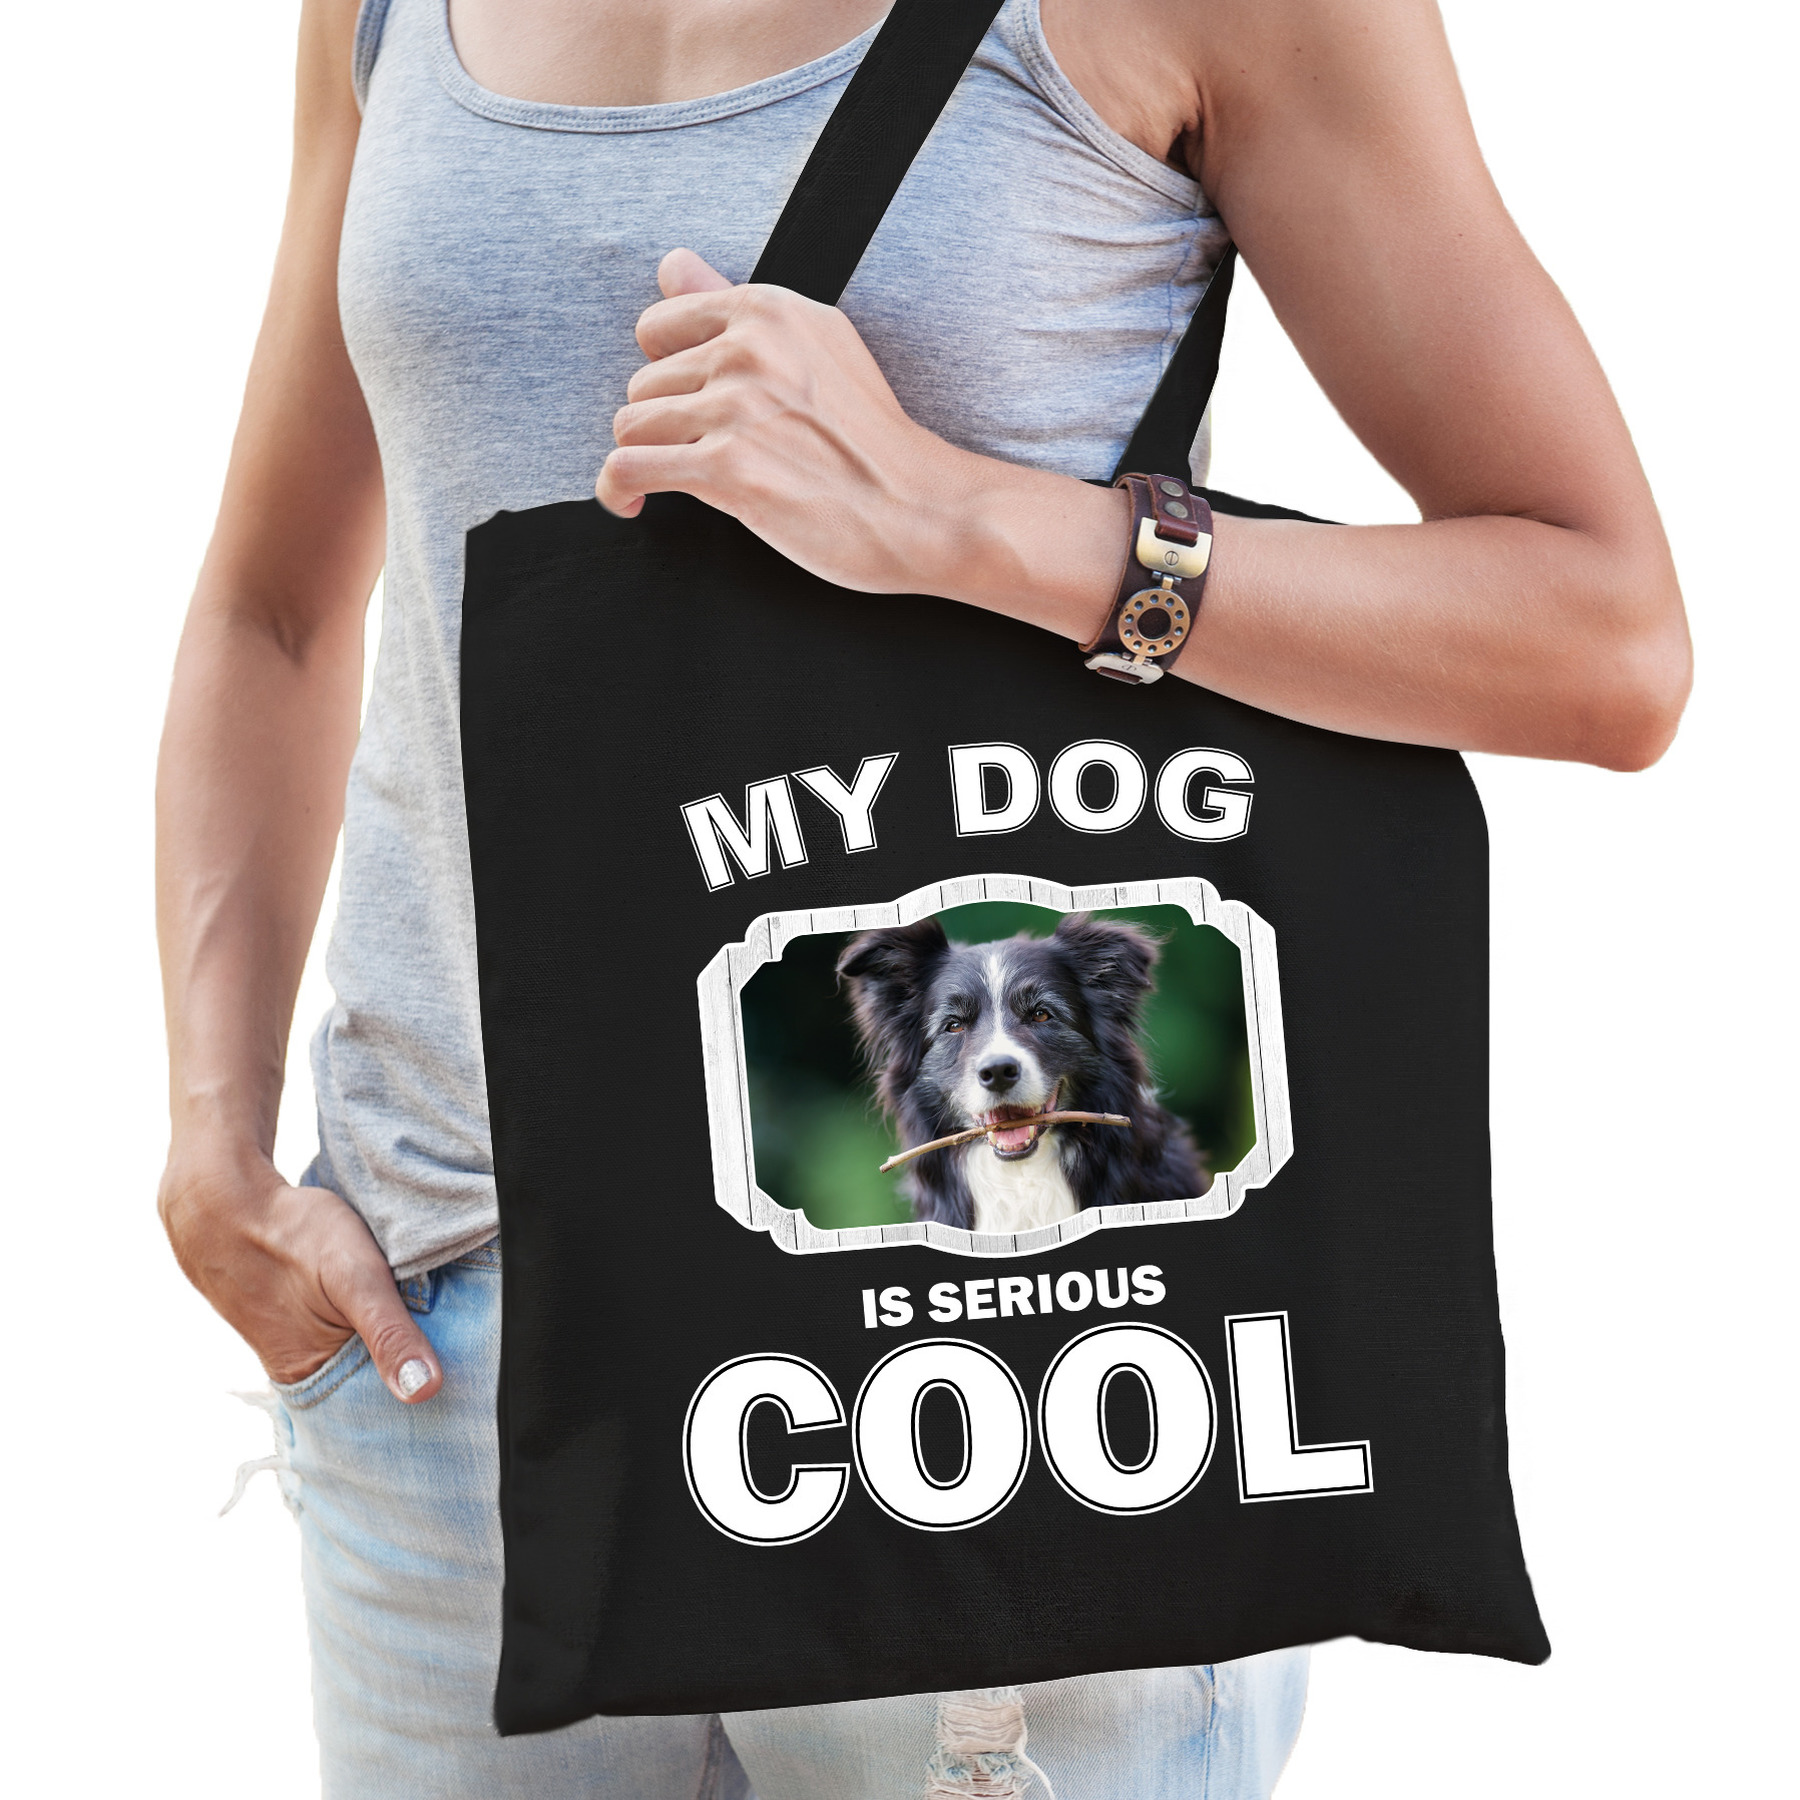 Katoenen tasje my dog is serious cool zwart - Border collie honden cadeau tas